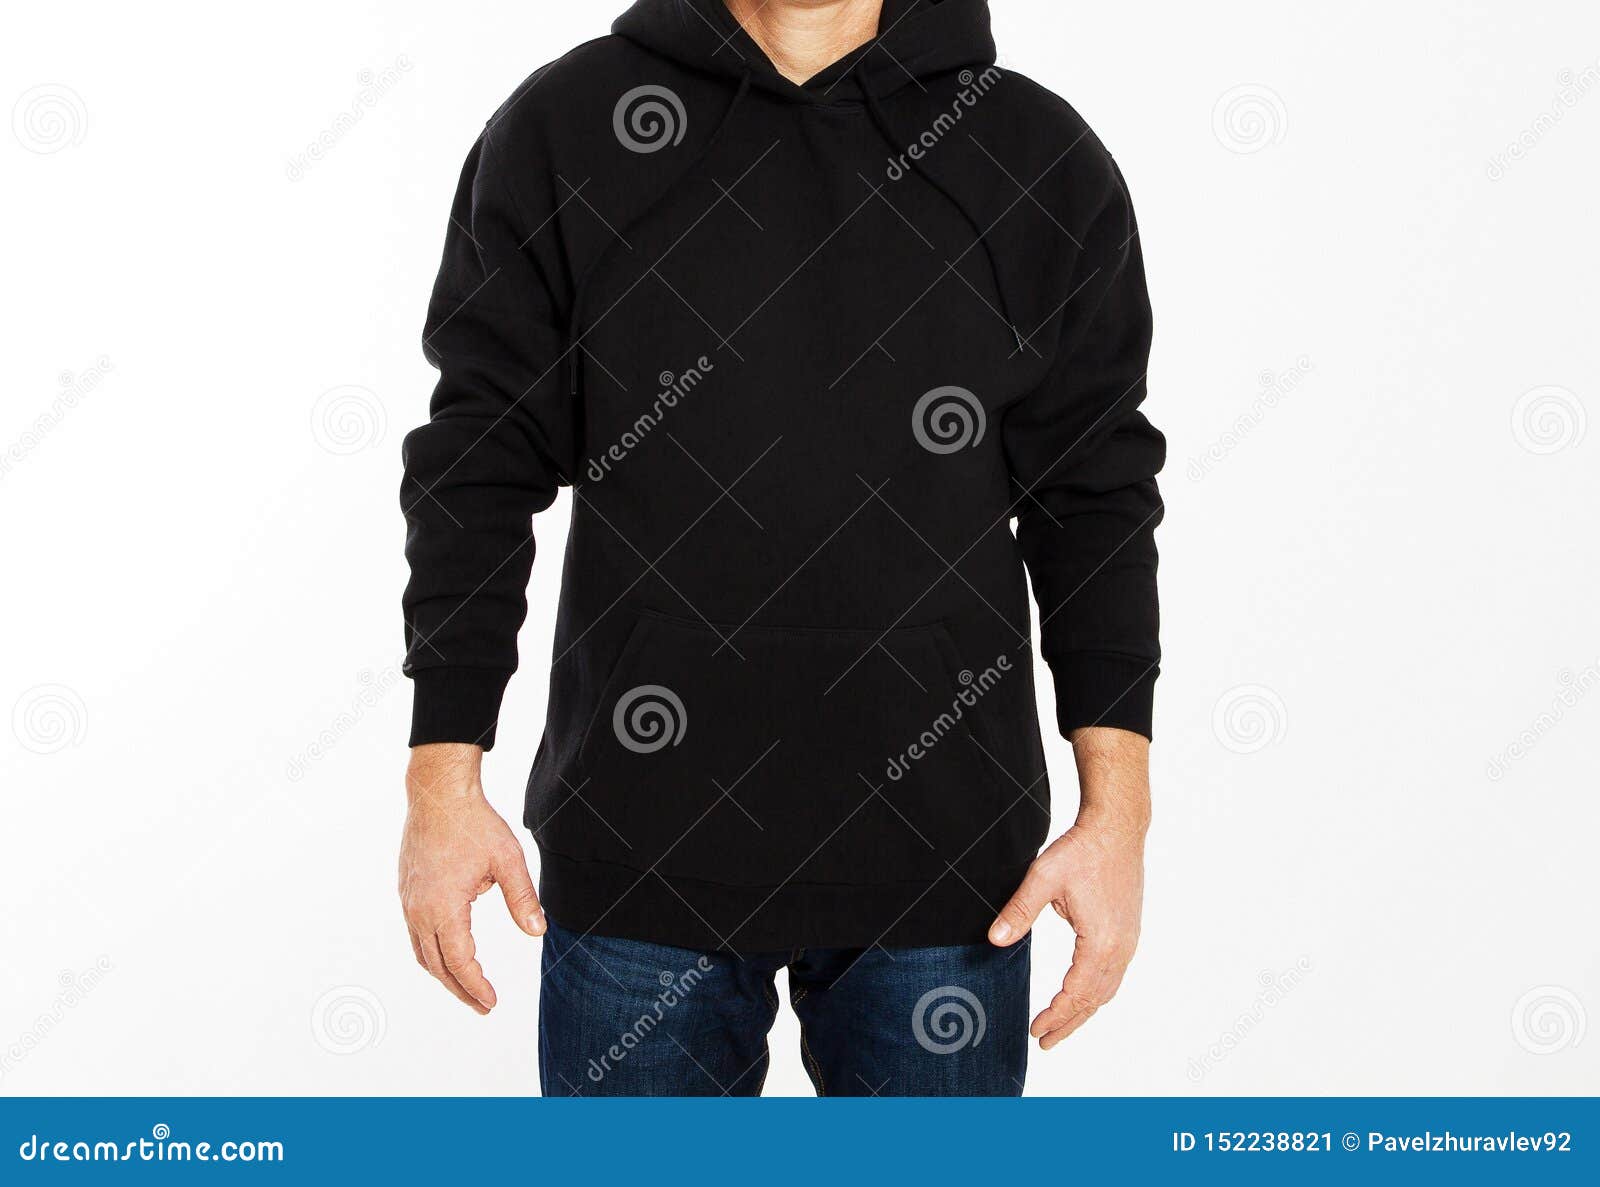 Download Man In Black Sweatshirt On White Background - Male Hoodie ...